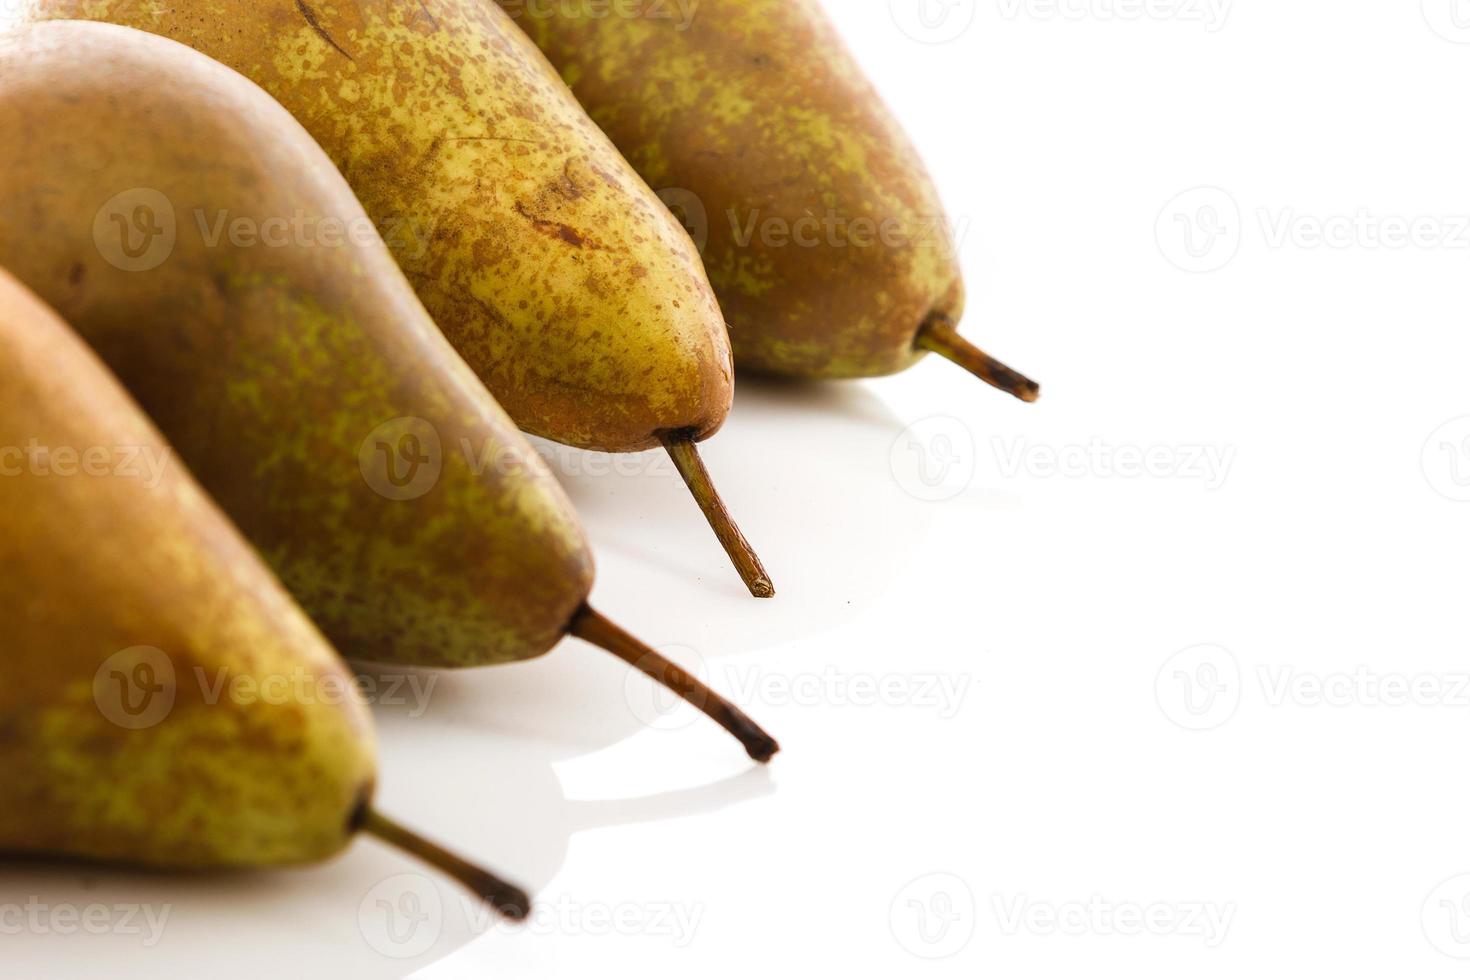 Fresh pears on white background photo